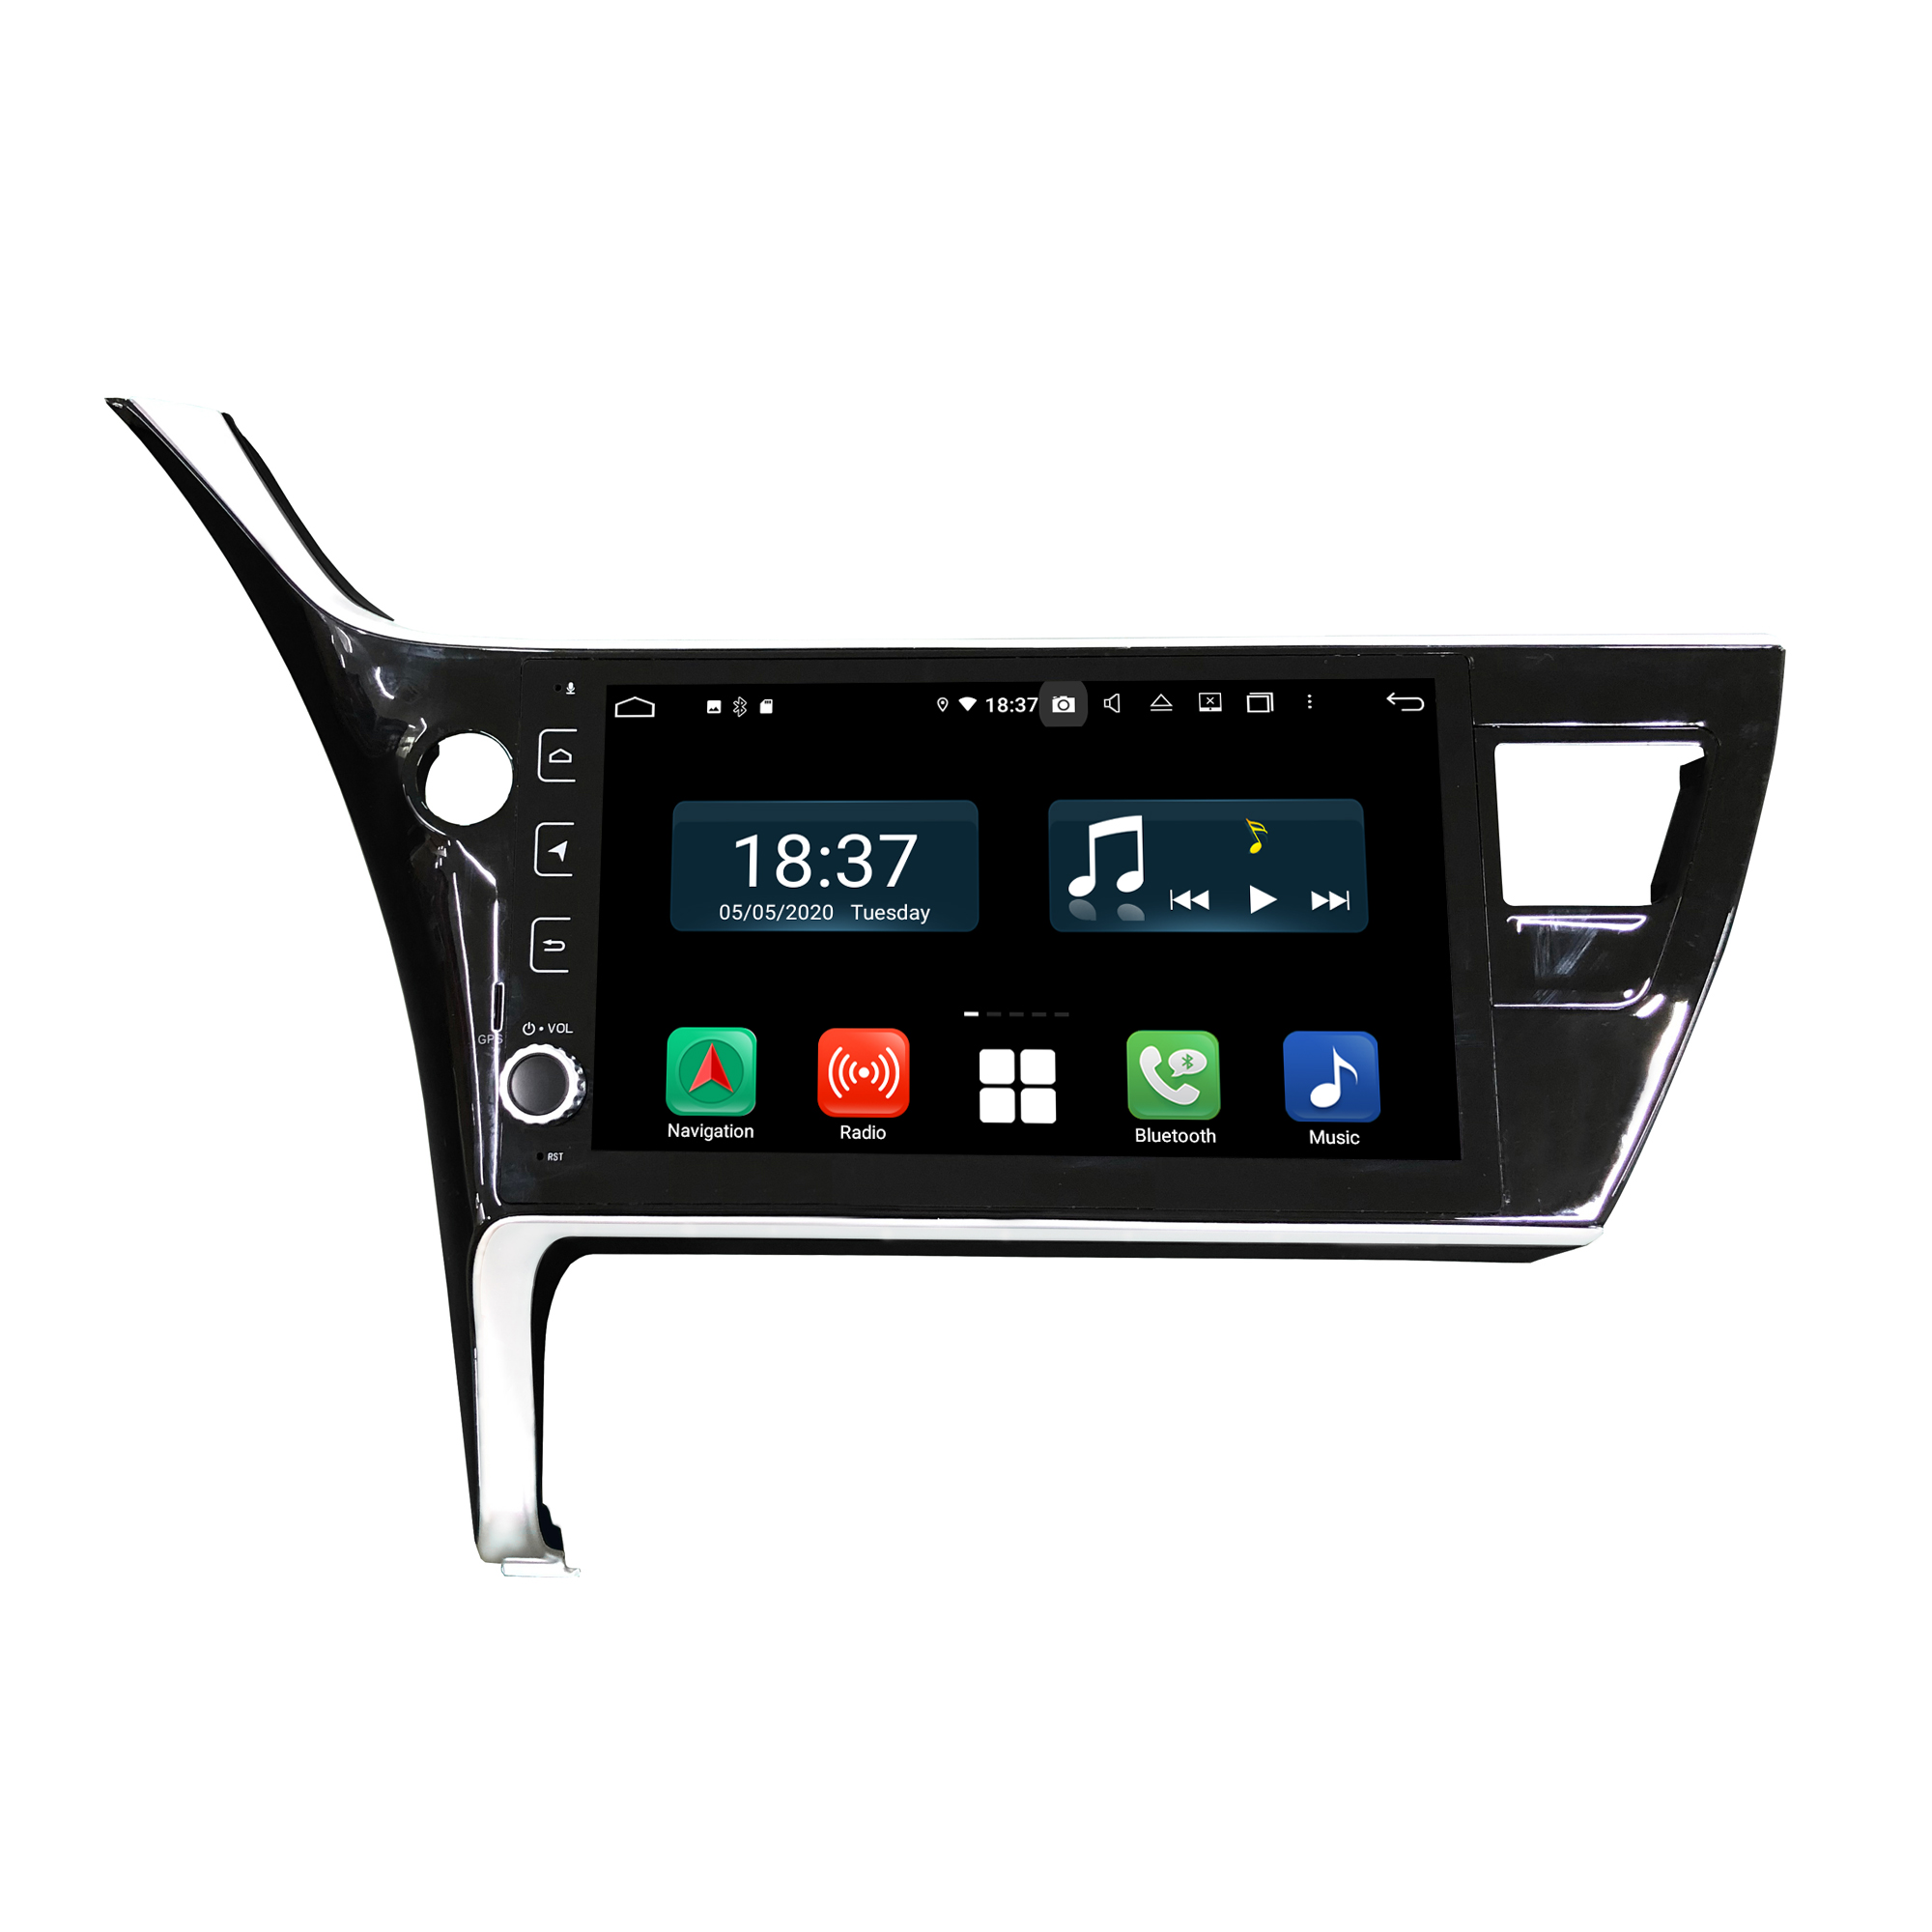 KD-1009 car audio cheap bluetooth car stereo for Corolla Innova Crysta